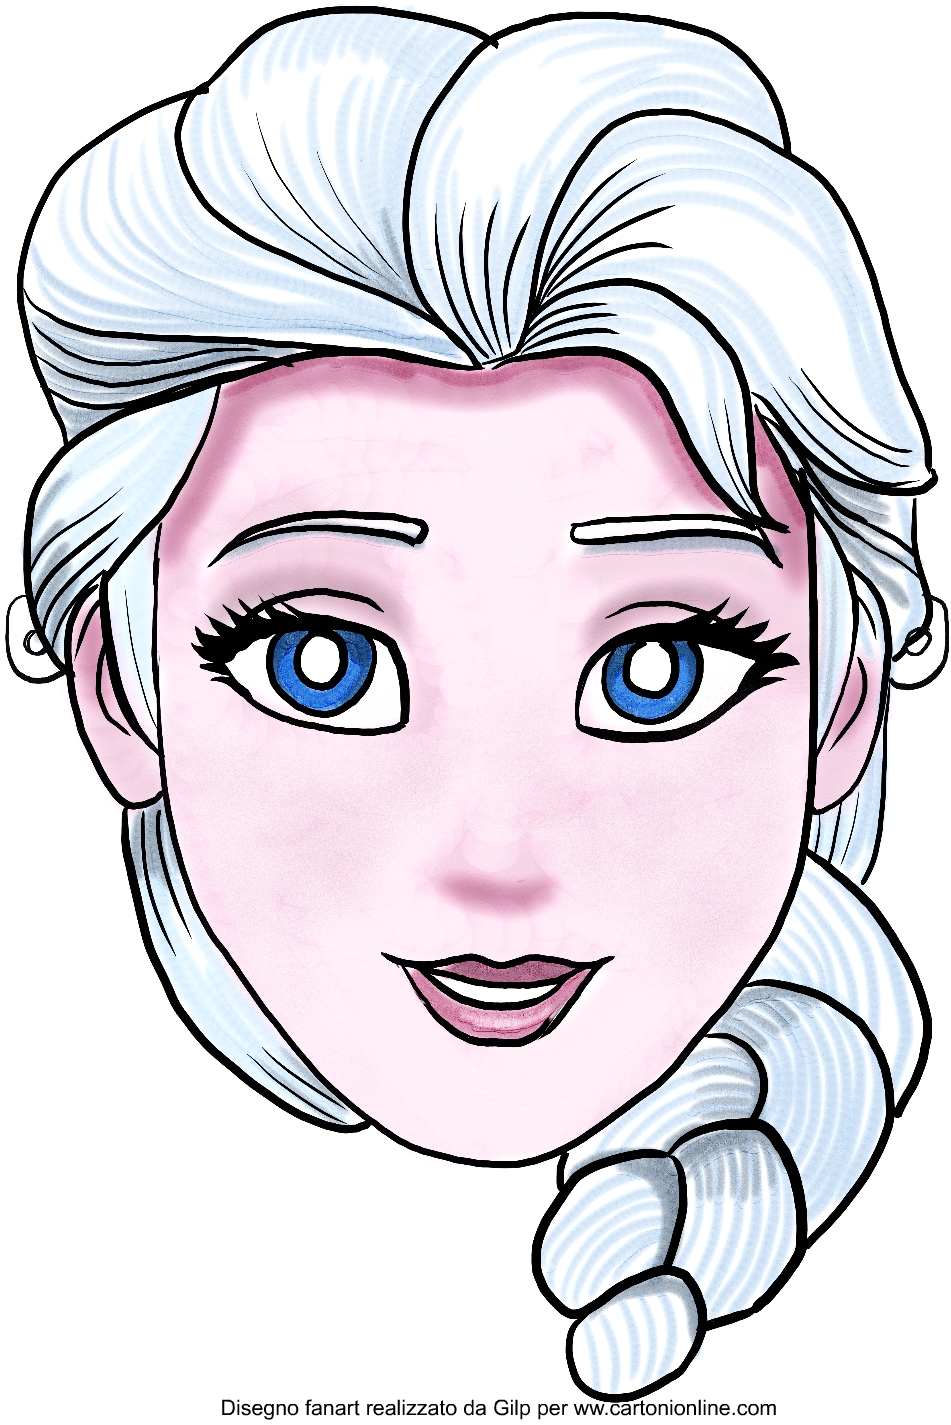 Máscara de Elsa (congelada)